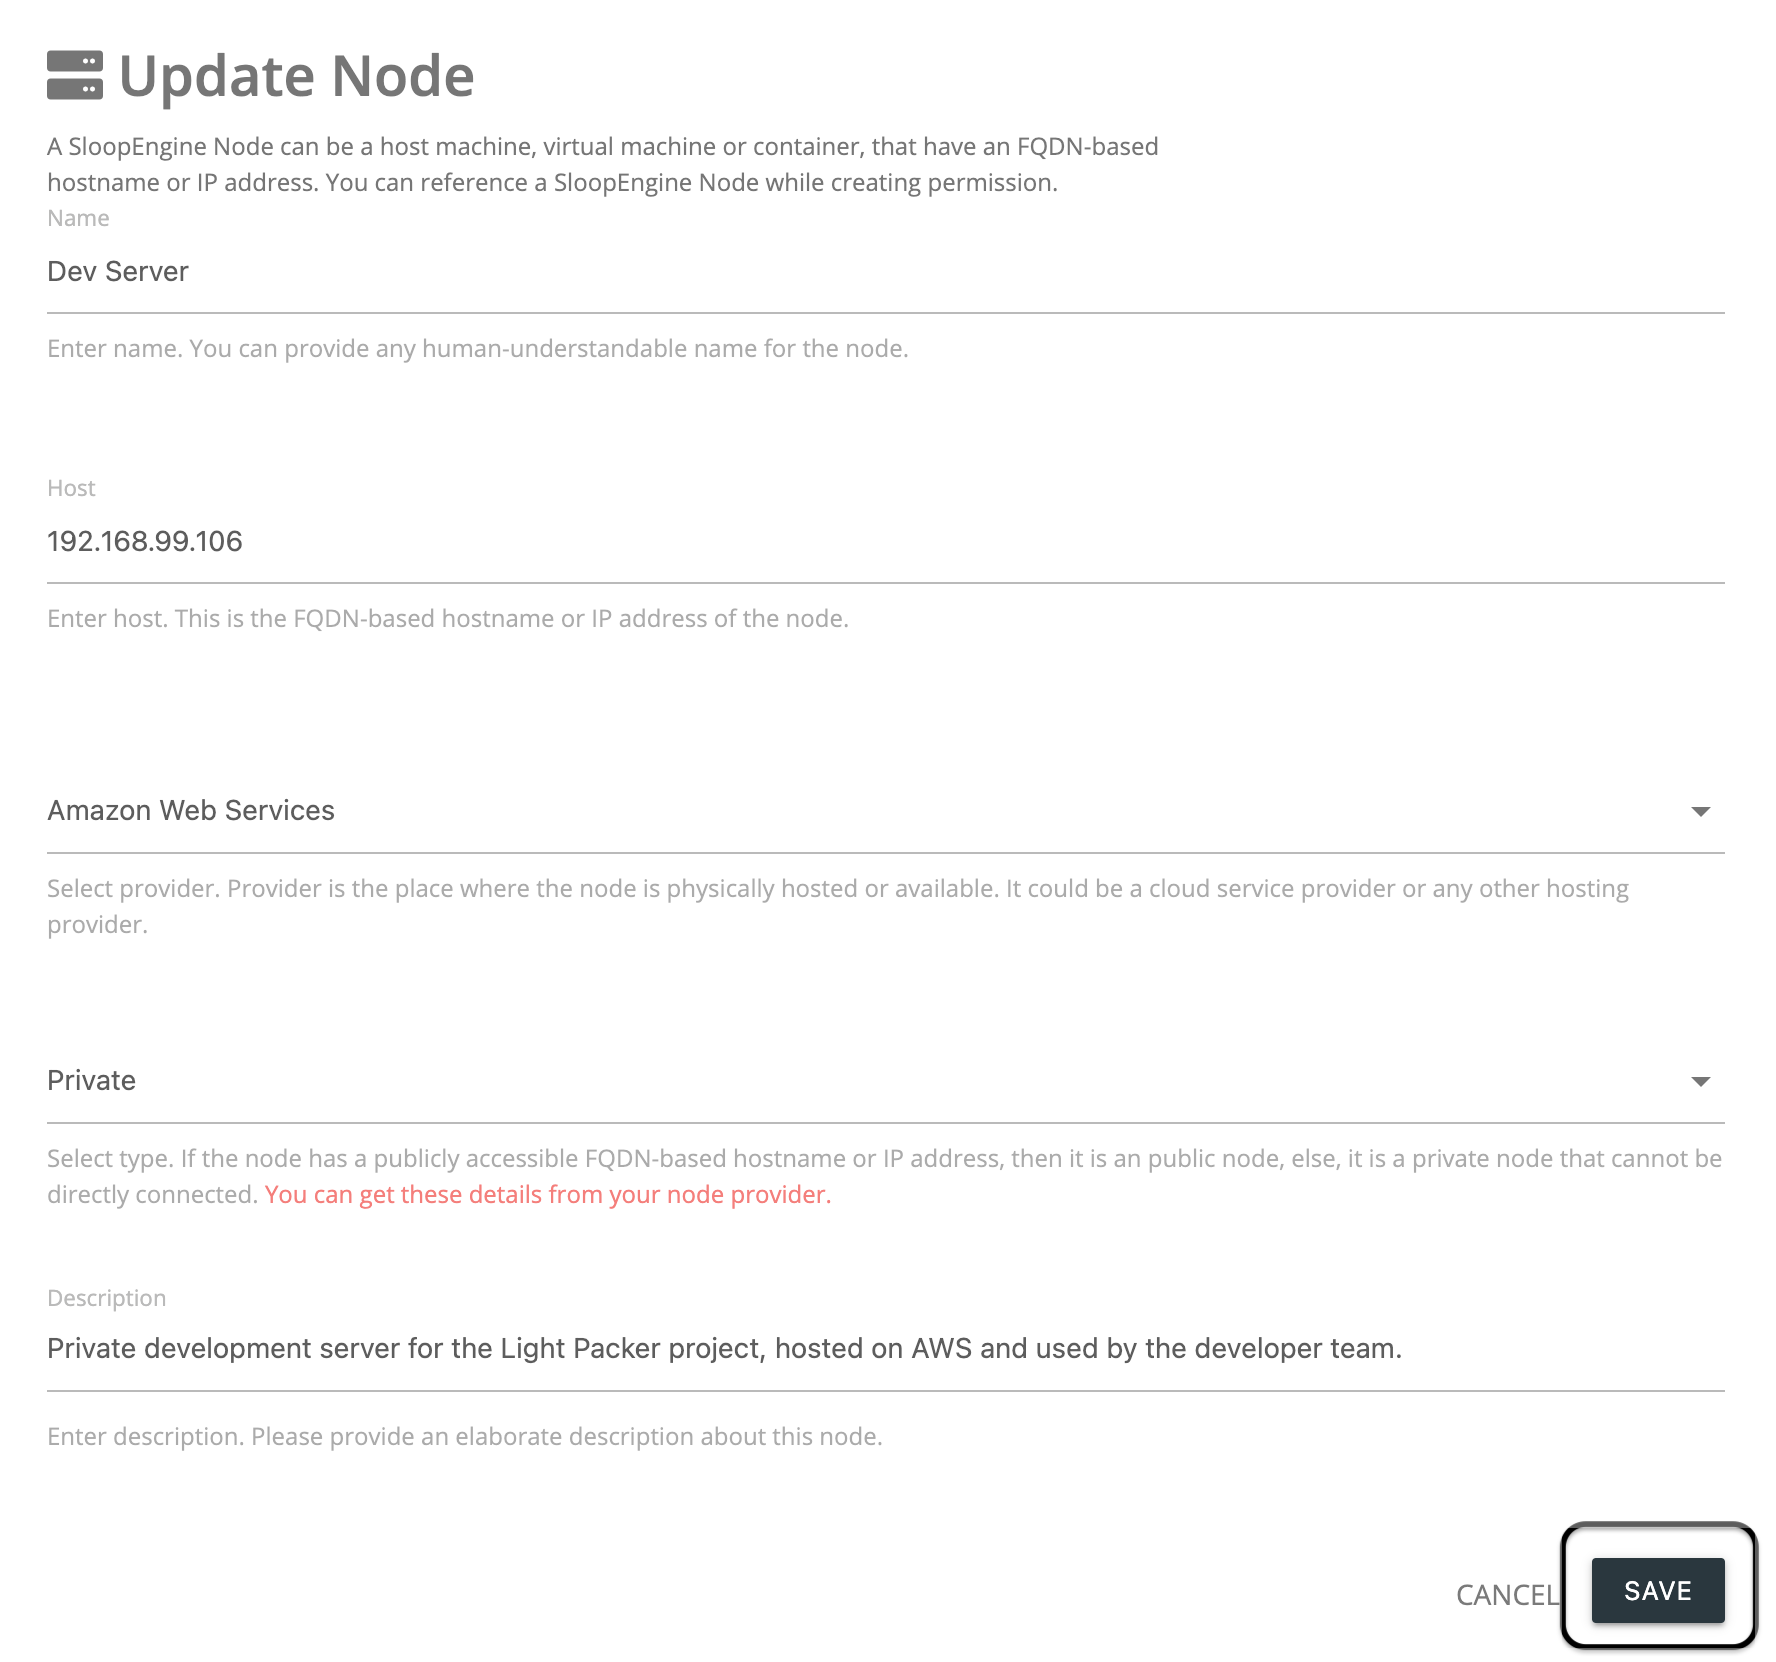 Screenshot of node updation form with valid information.